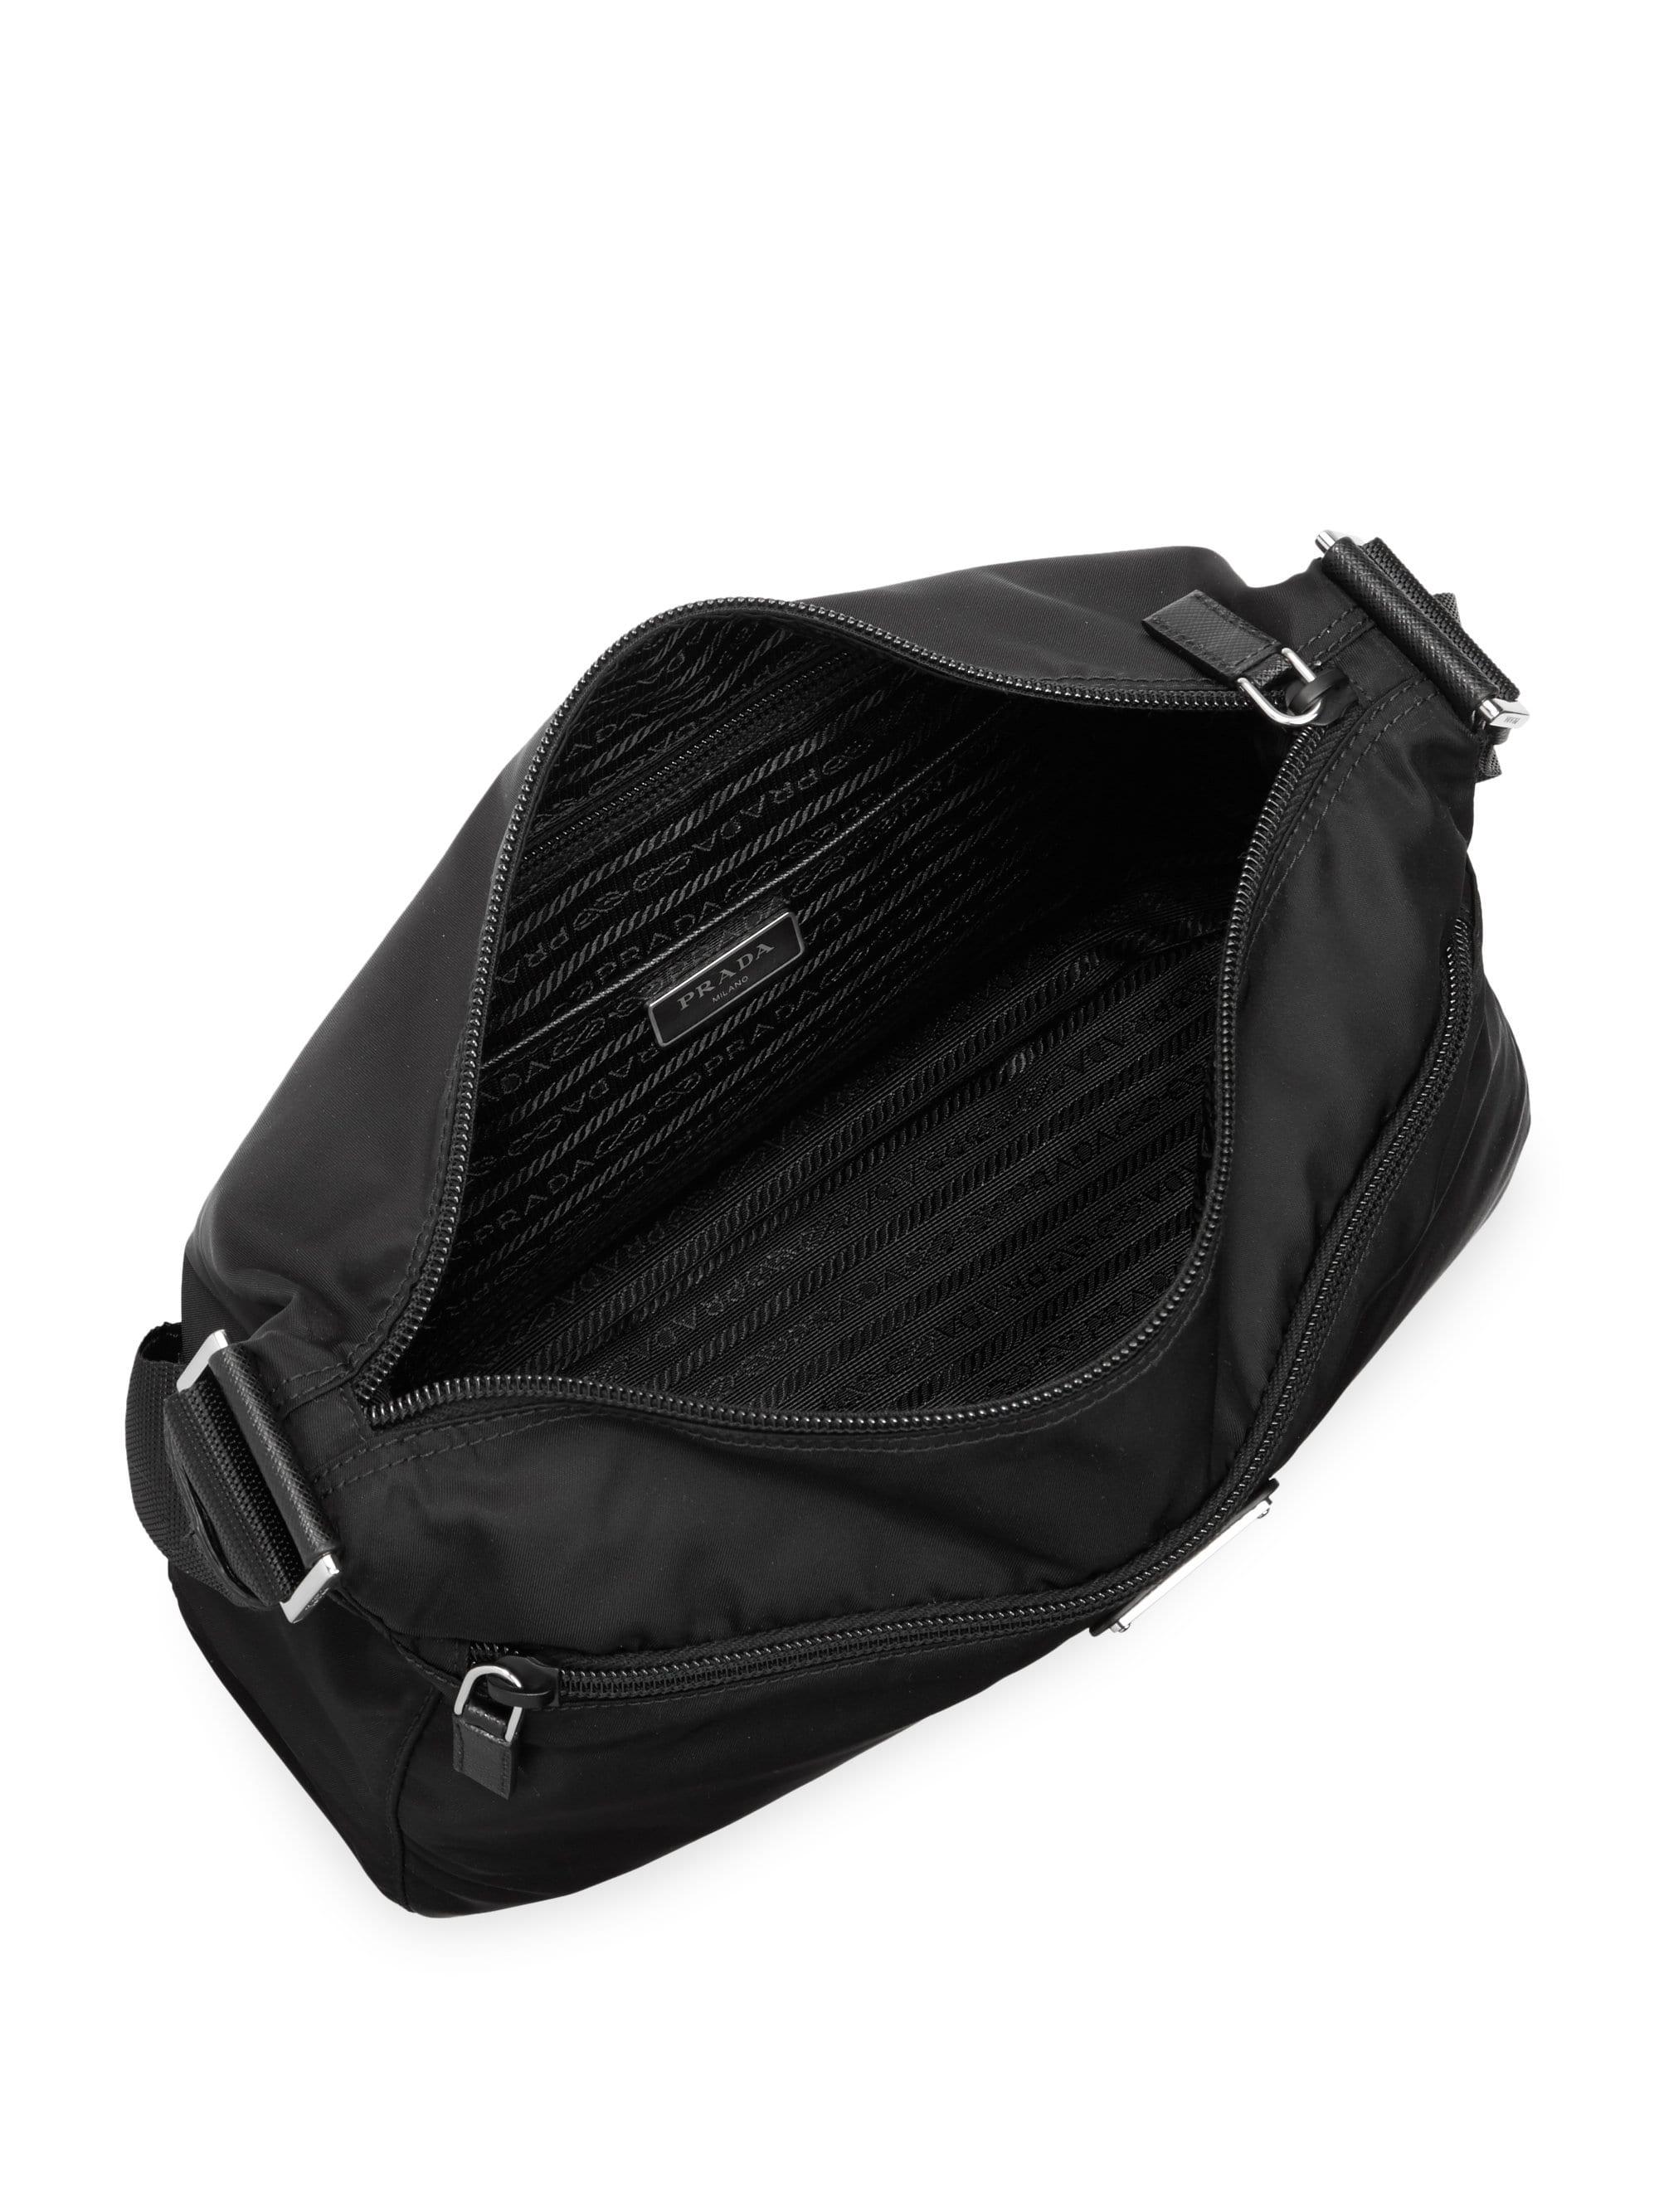 Prada Synthetic Large Nylon Crossbody Bag in Black - Lyst